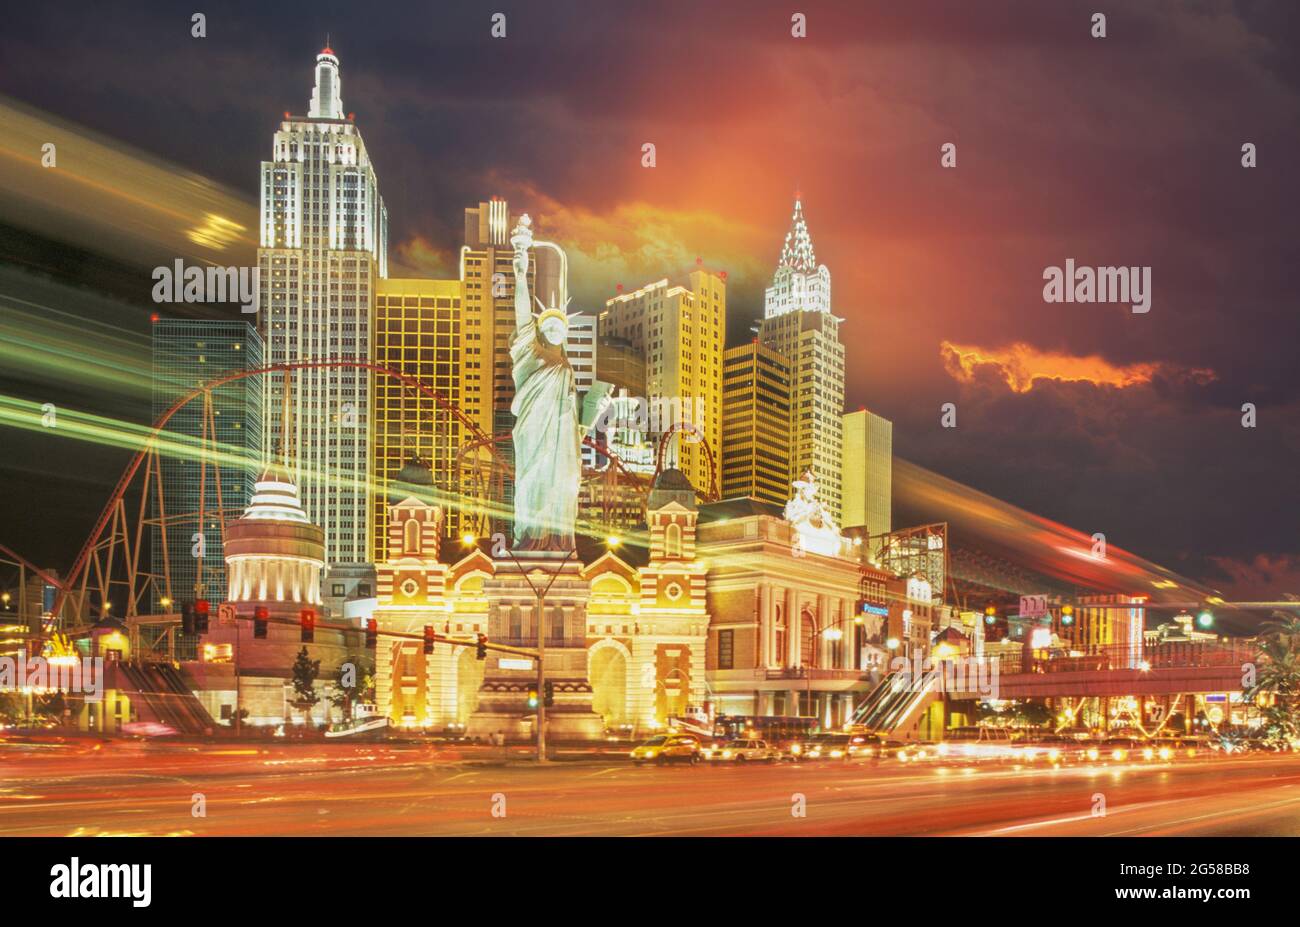 USA, Nevada, Las Vegas, Casinos and hotels illuminated at night Stock Photo